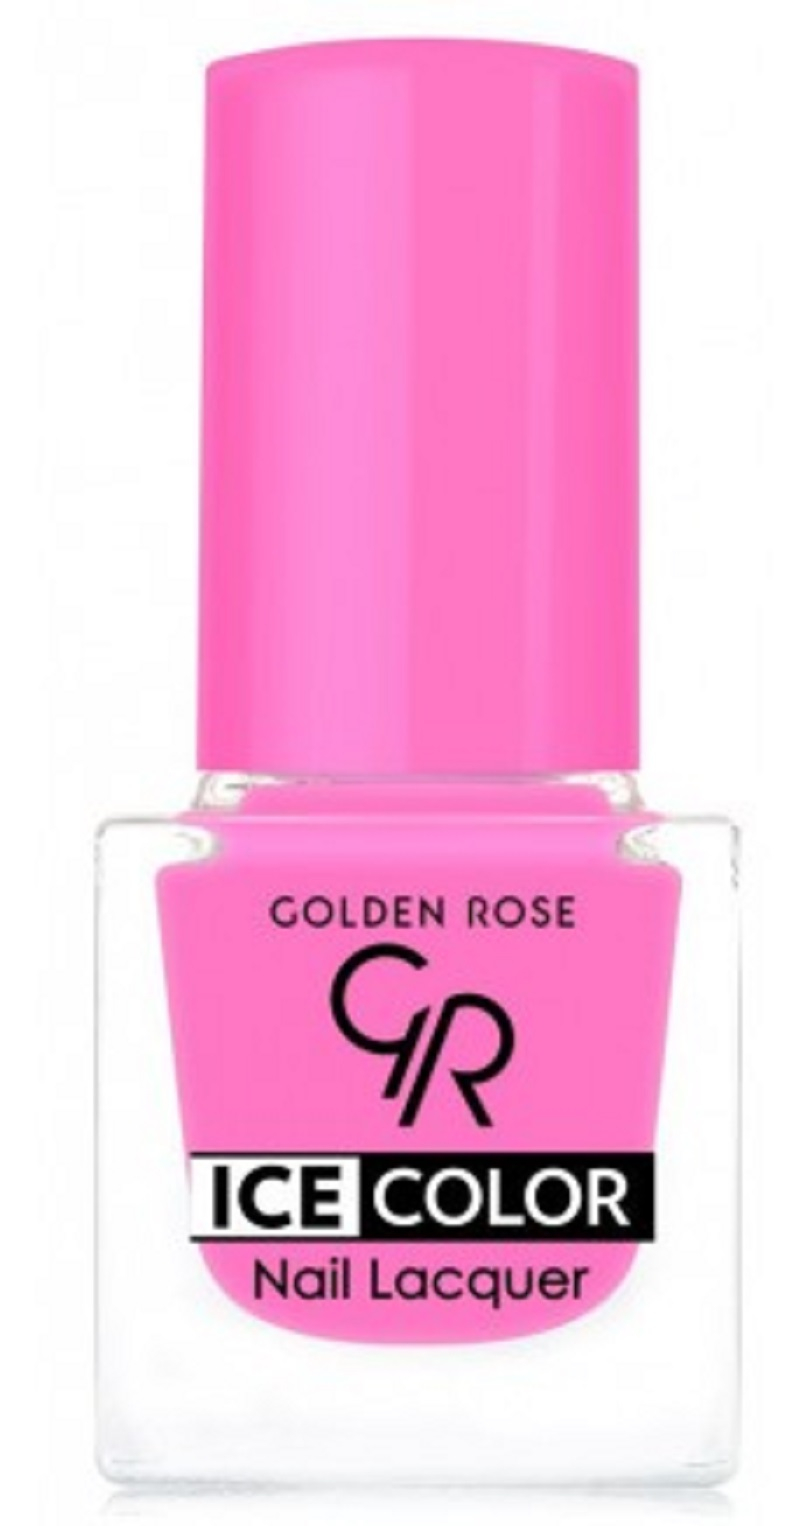 Golden Rose Ice Color Nail Lacquer Lak Na Nehty Mini 201 6 Ml Parfemomanie Cz